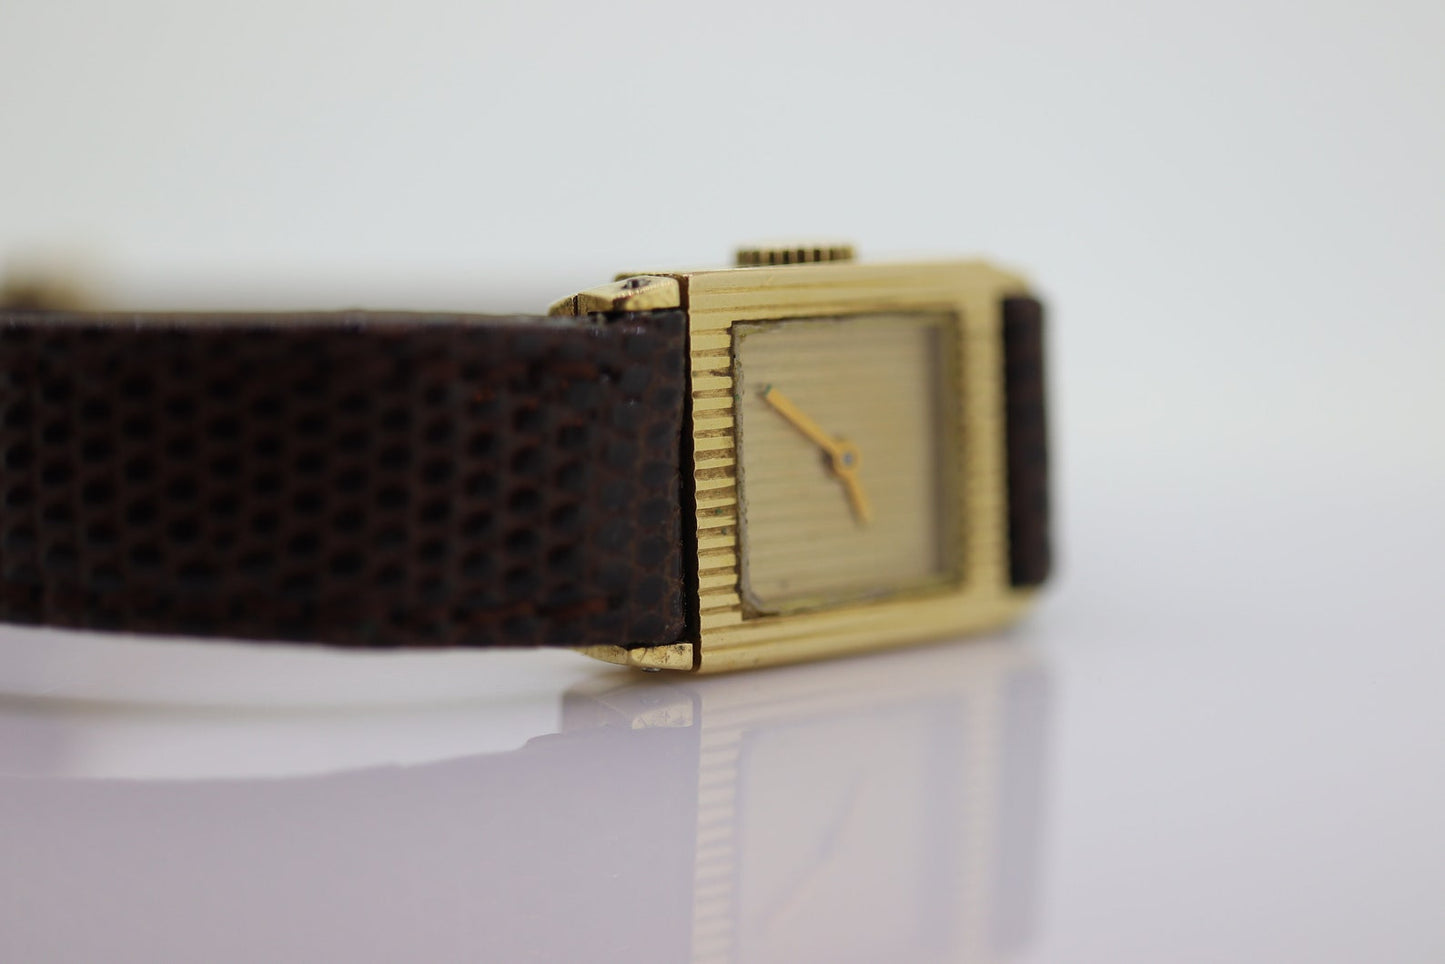 Boucheron 18k Reflet Watch. Vintage 18k Gold Manual Ladies watch.